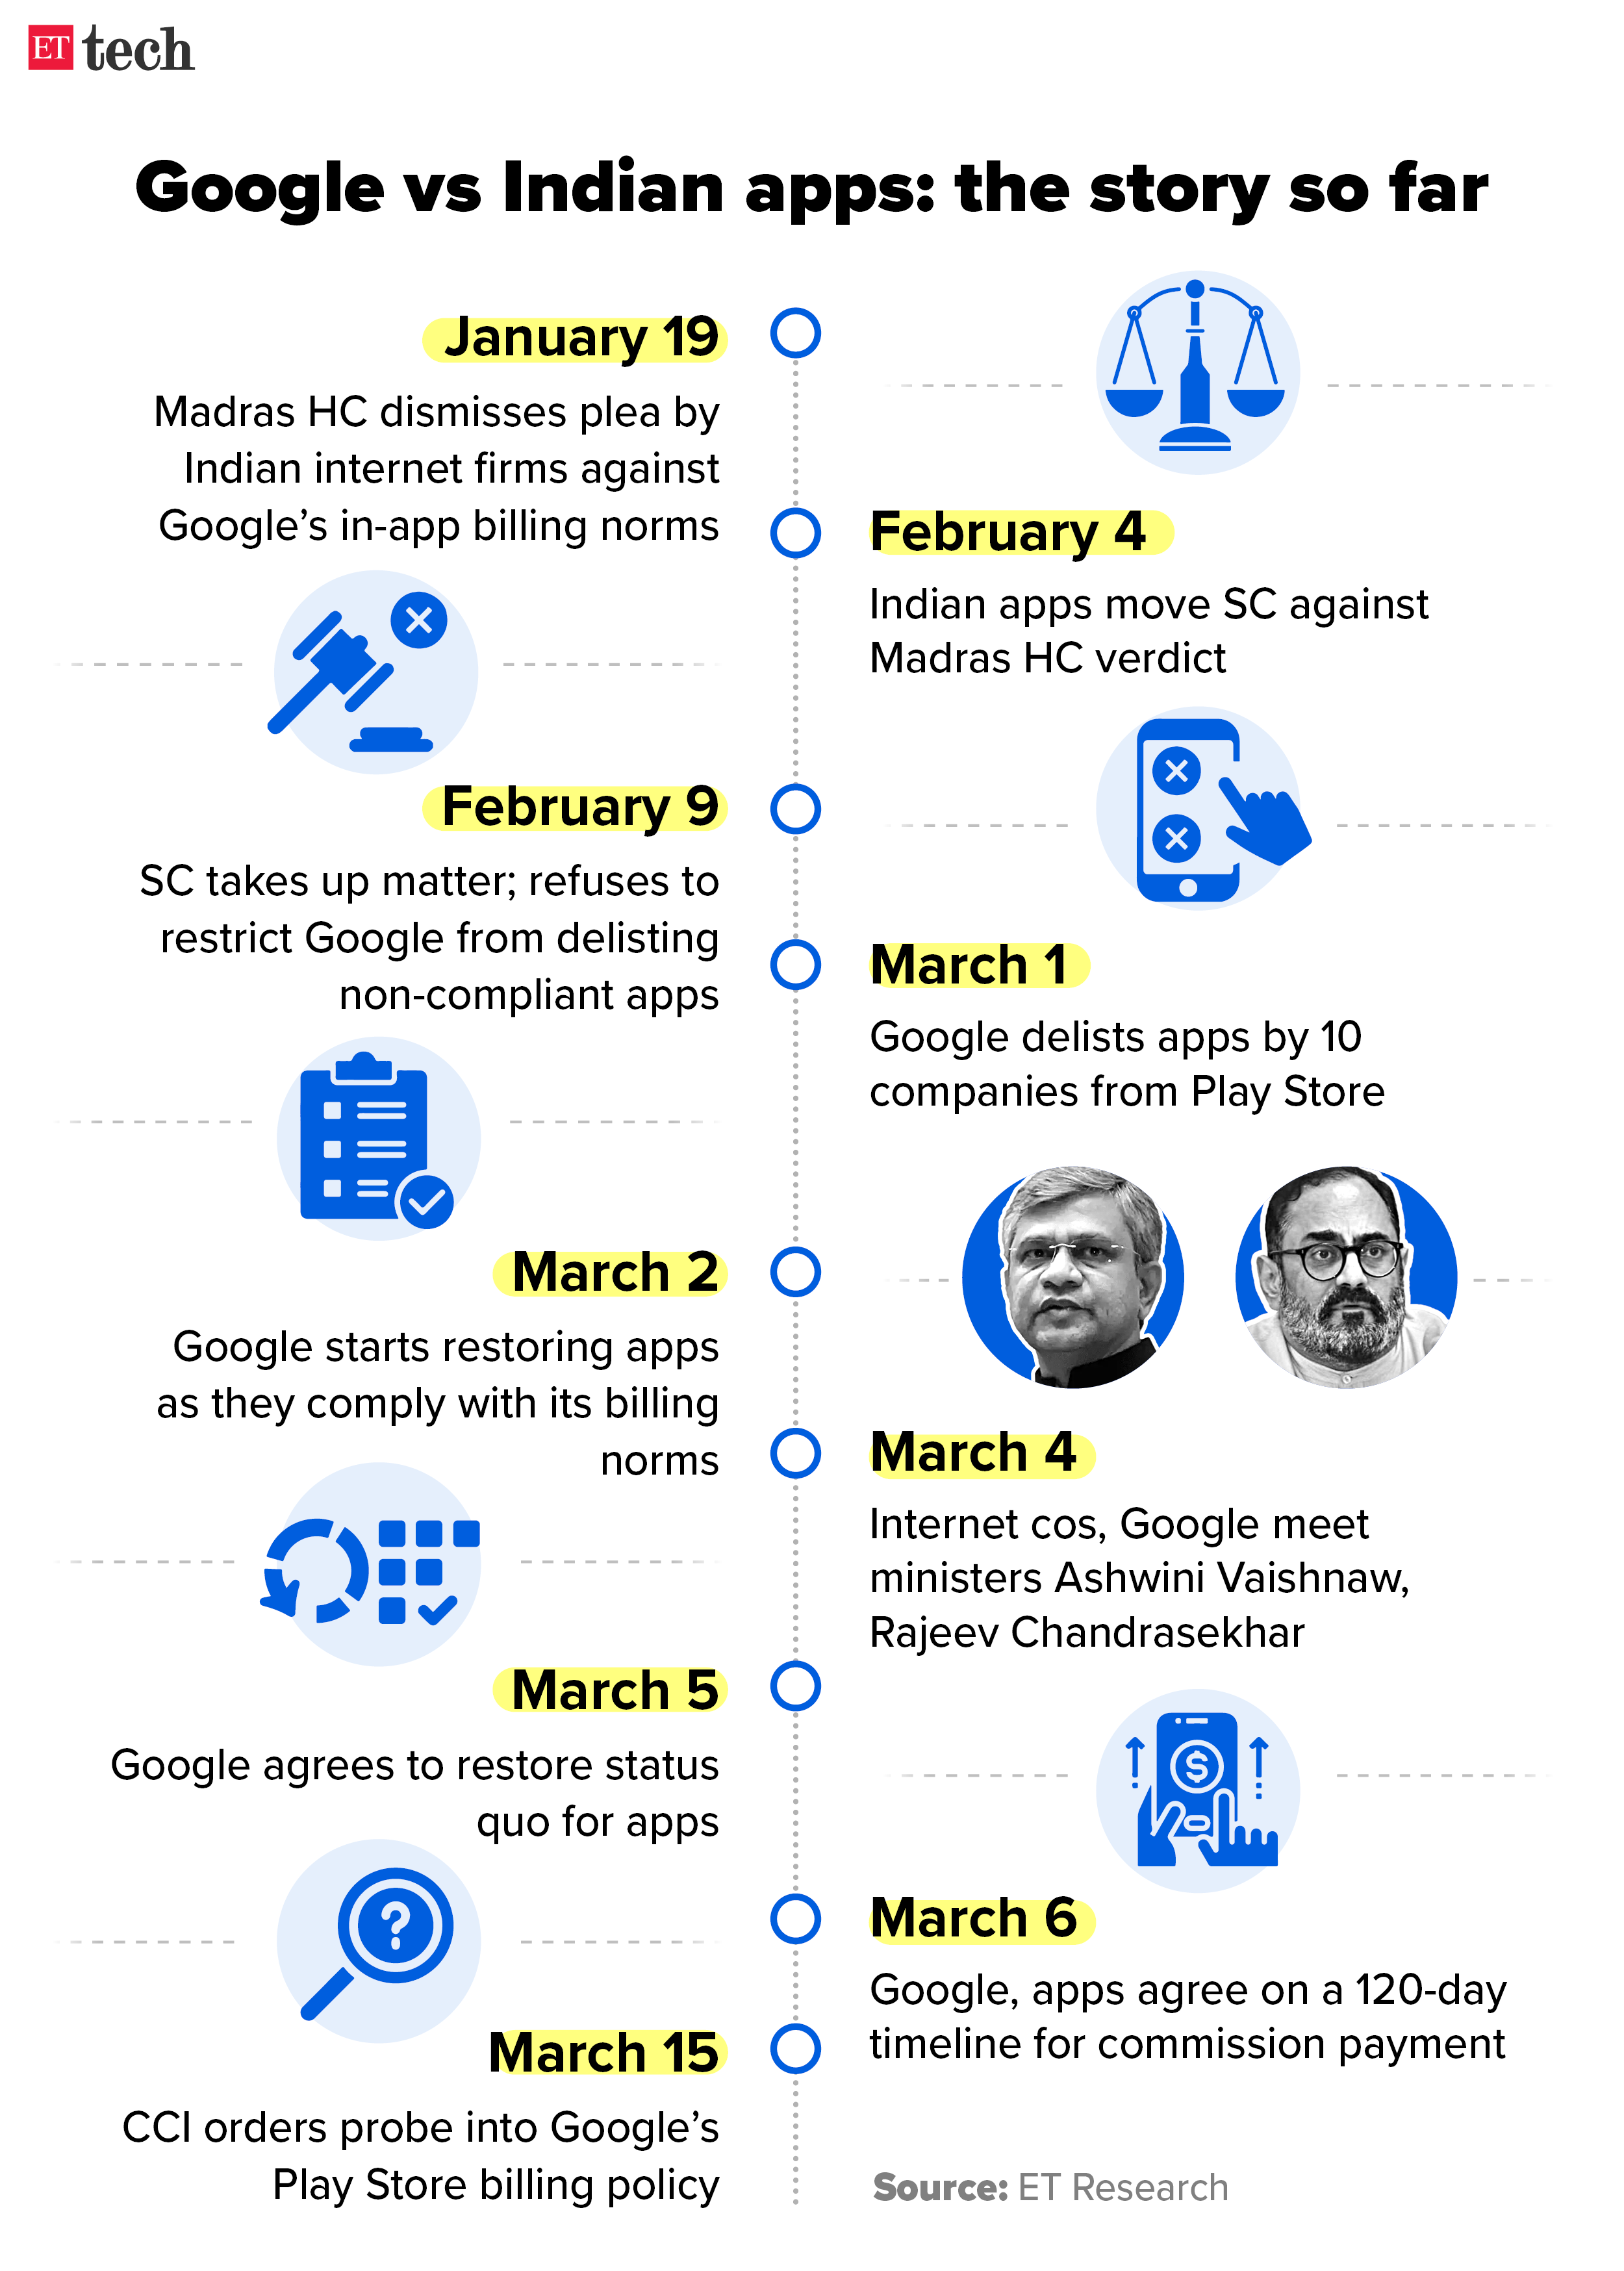 Google vs Indian apps the story so far